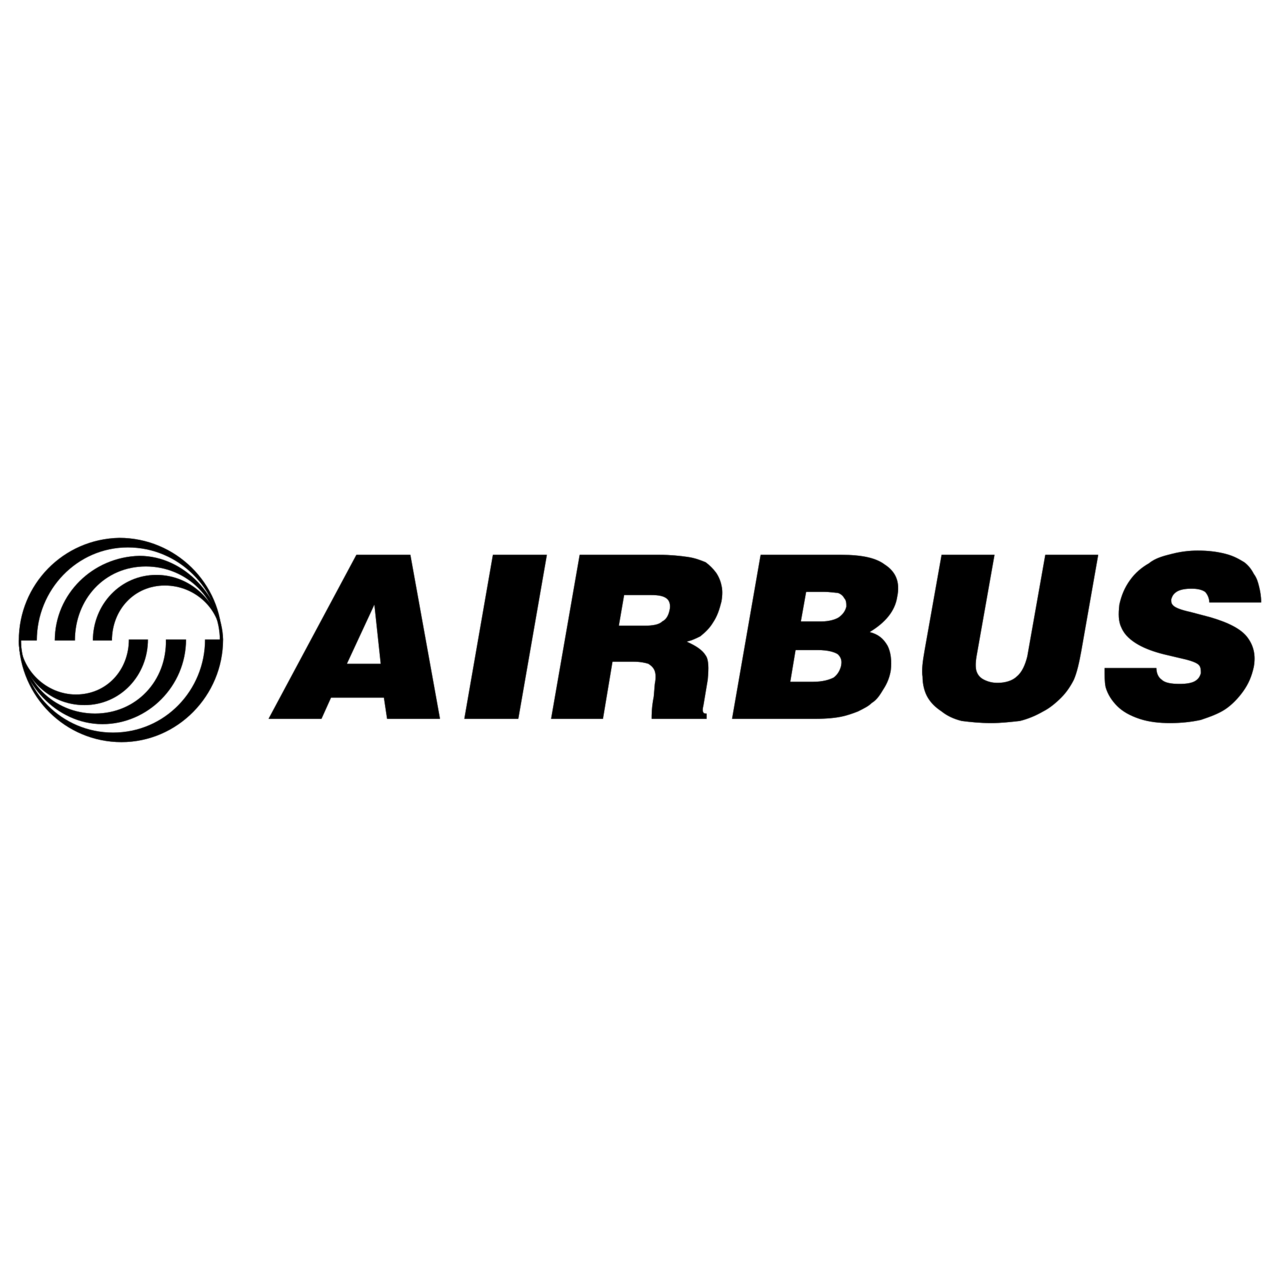 airbus-logo-black-and-white-1